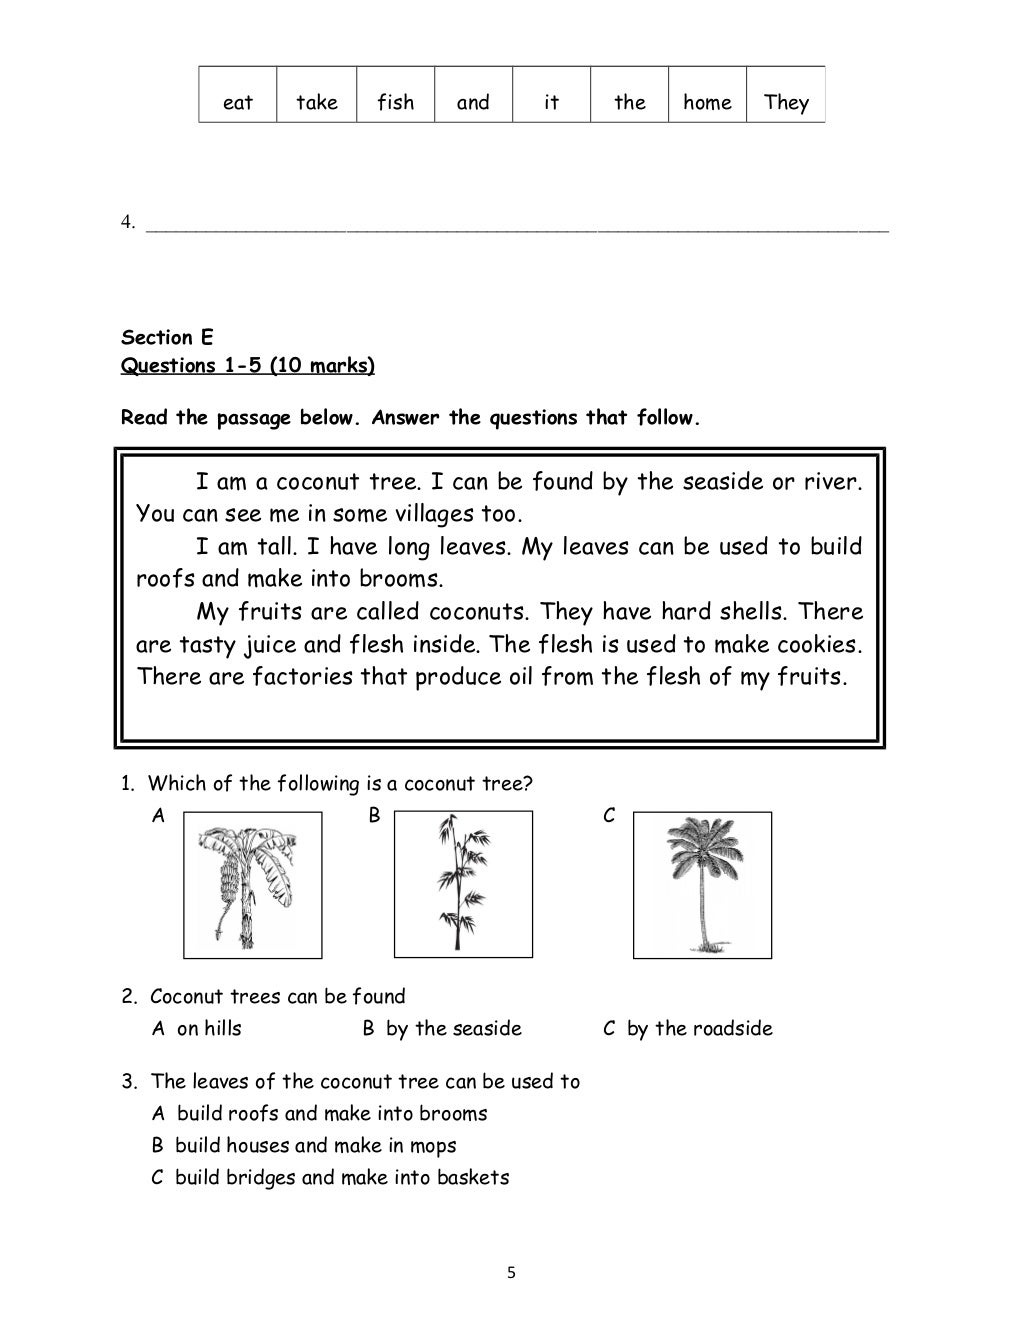 kssr-english-world-of-stories-exercise-reading-comprehension-kindergarten-reading